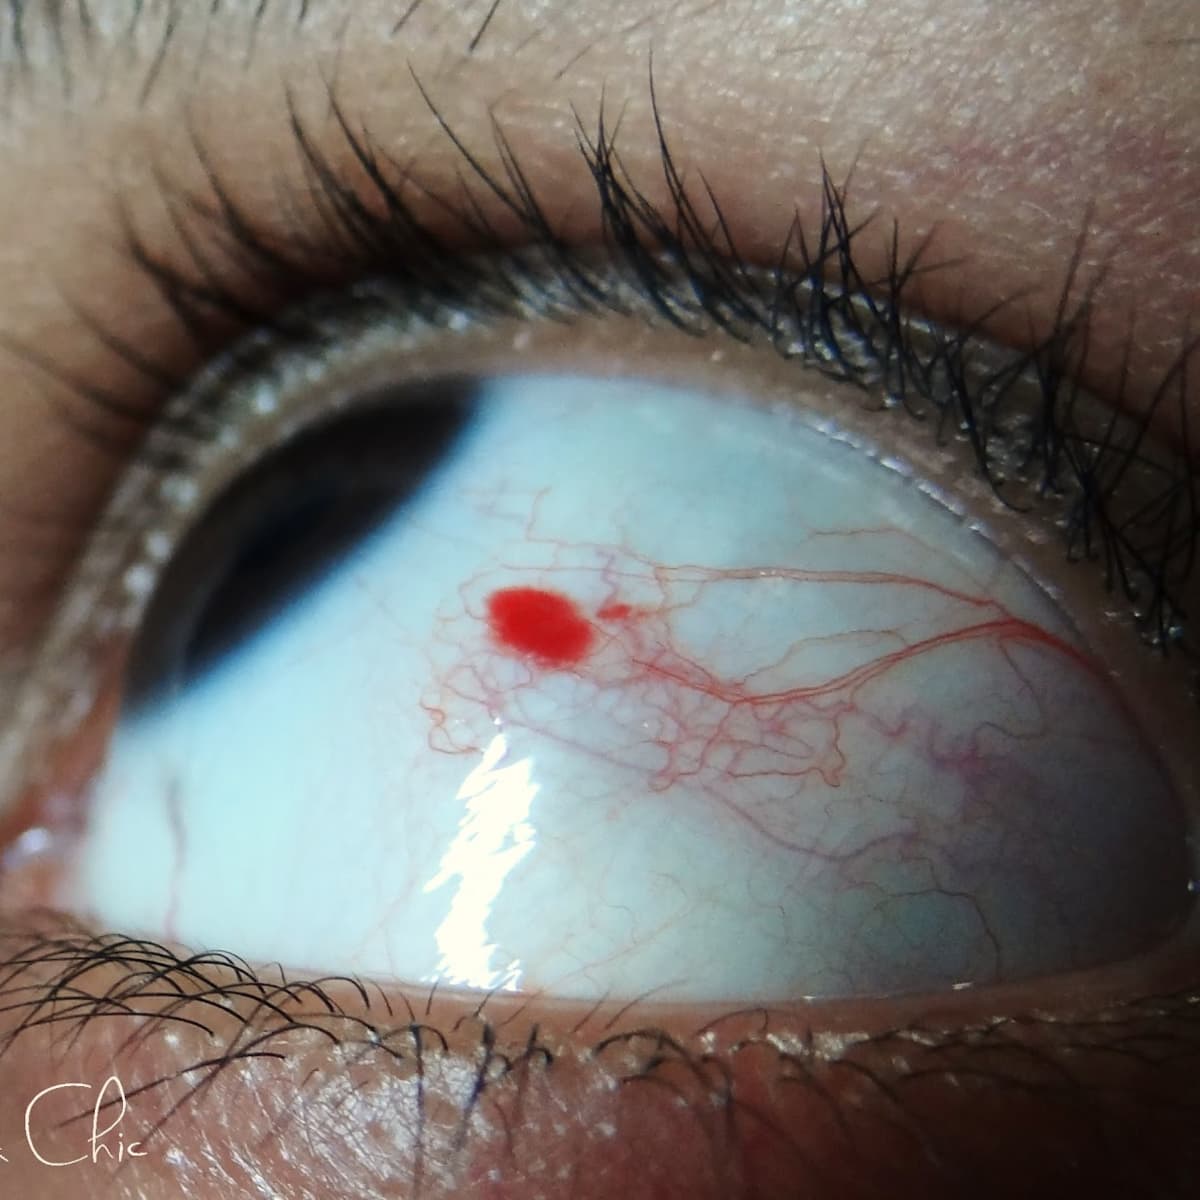 Causes of a Spot Eye - YouMeMindBody